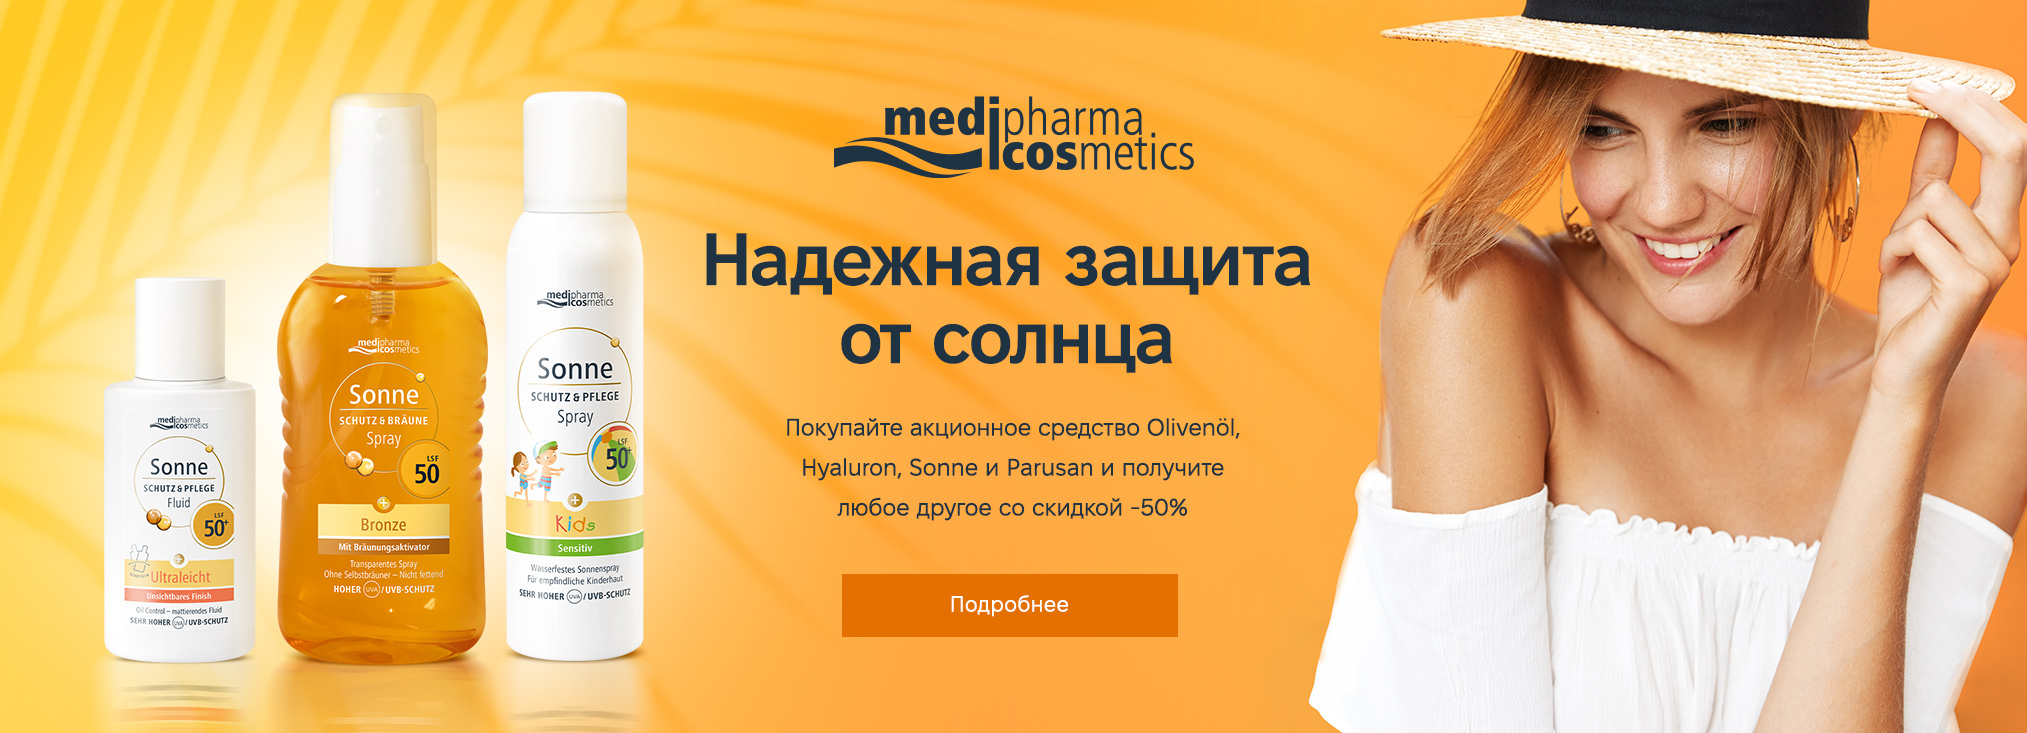 D'Oliva (Olivenol), Pharma Hyaluron (Hyaluron), Medipharma Cosmetics, Parusan_20273